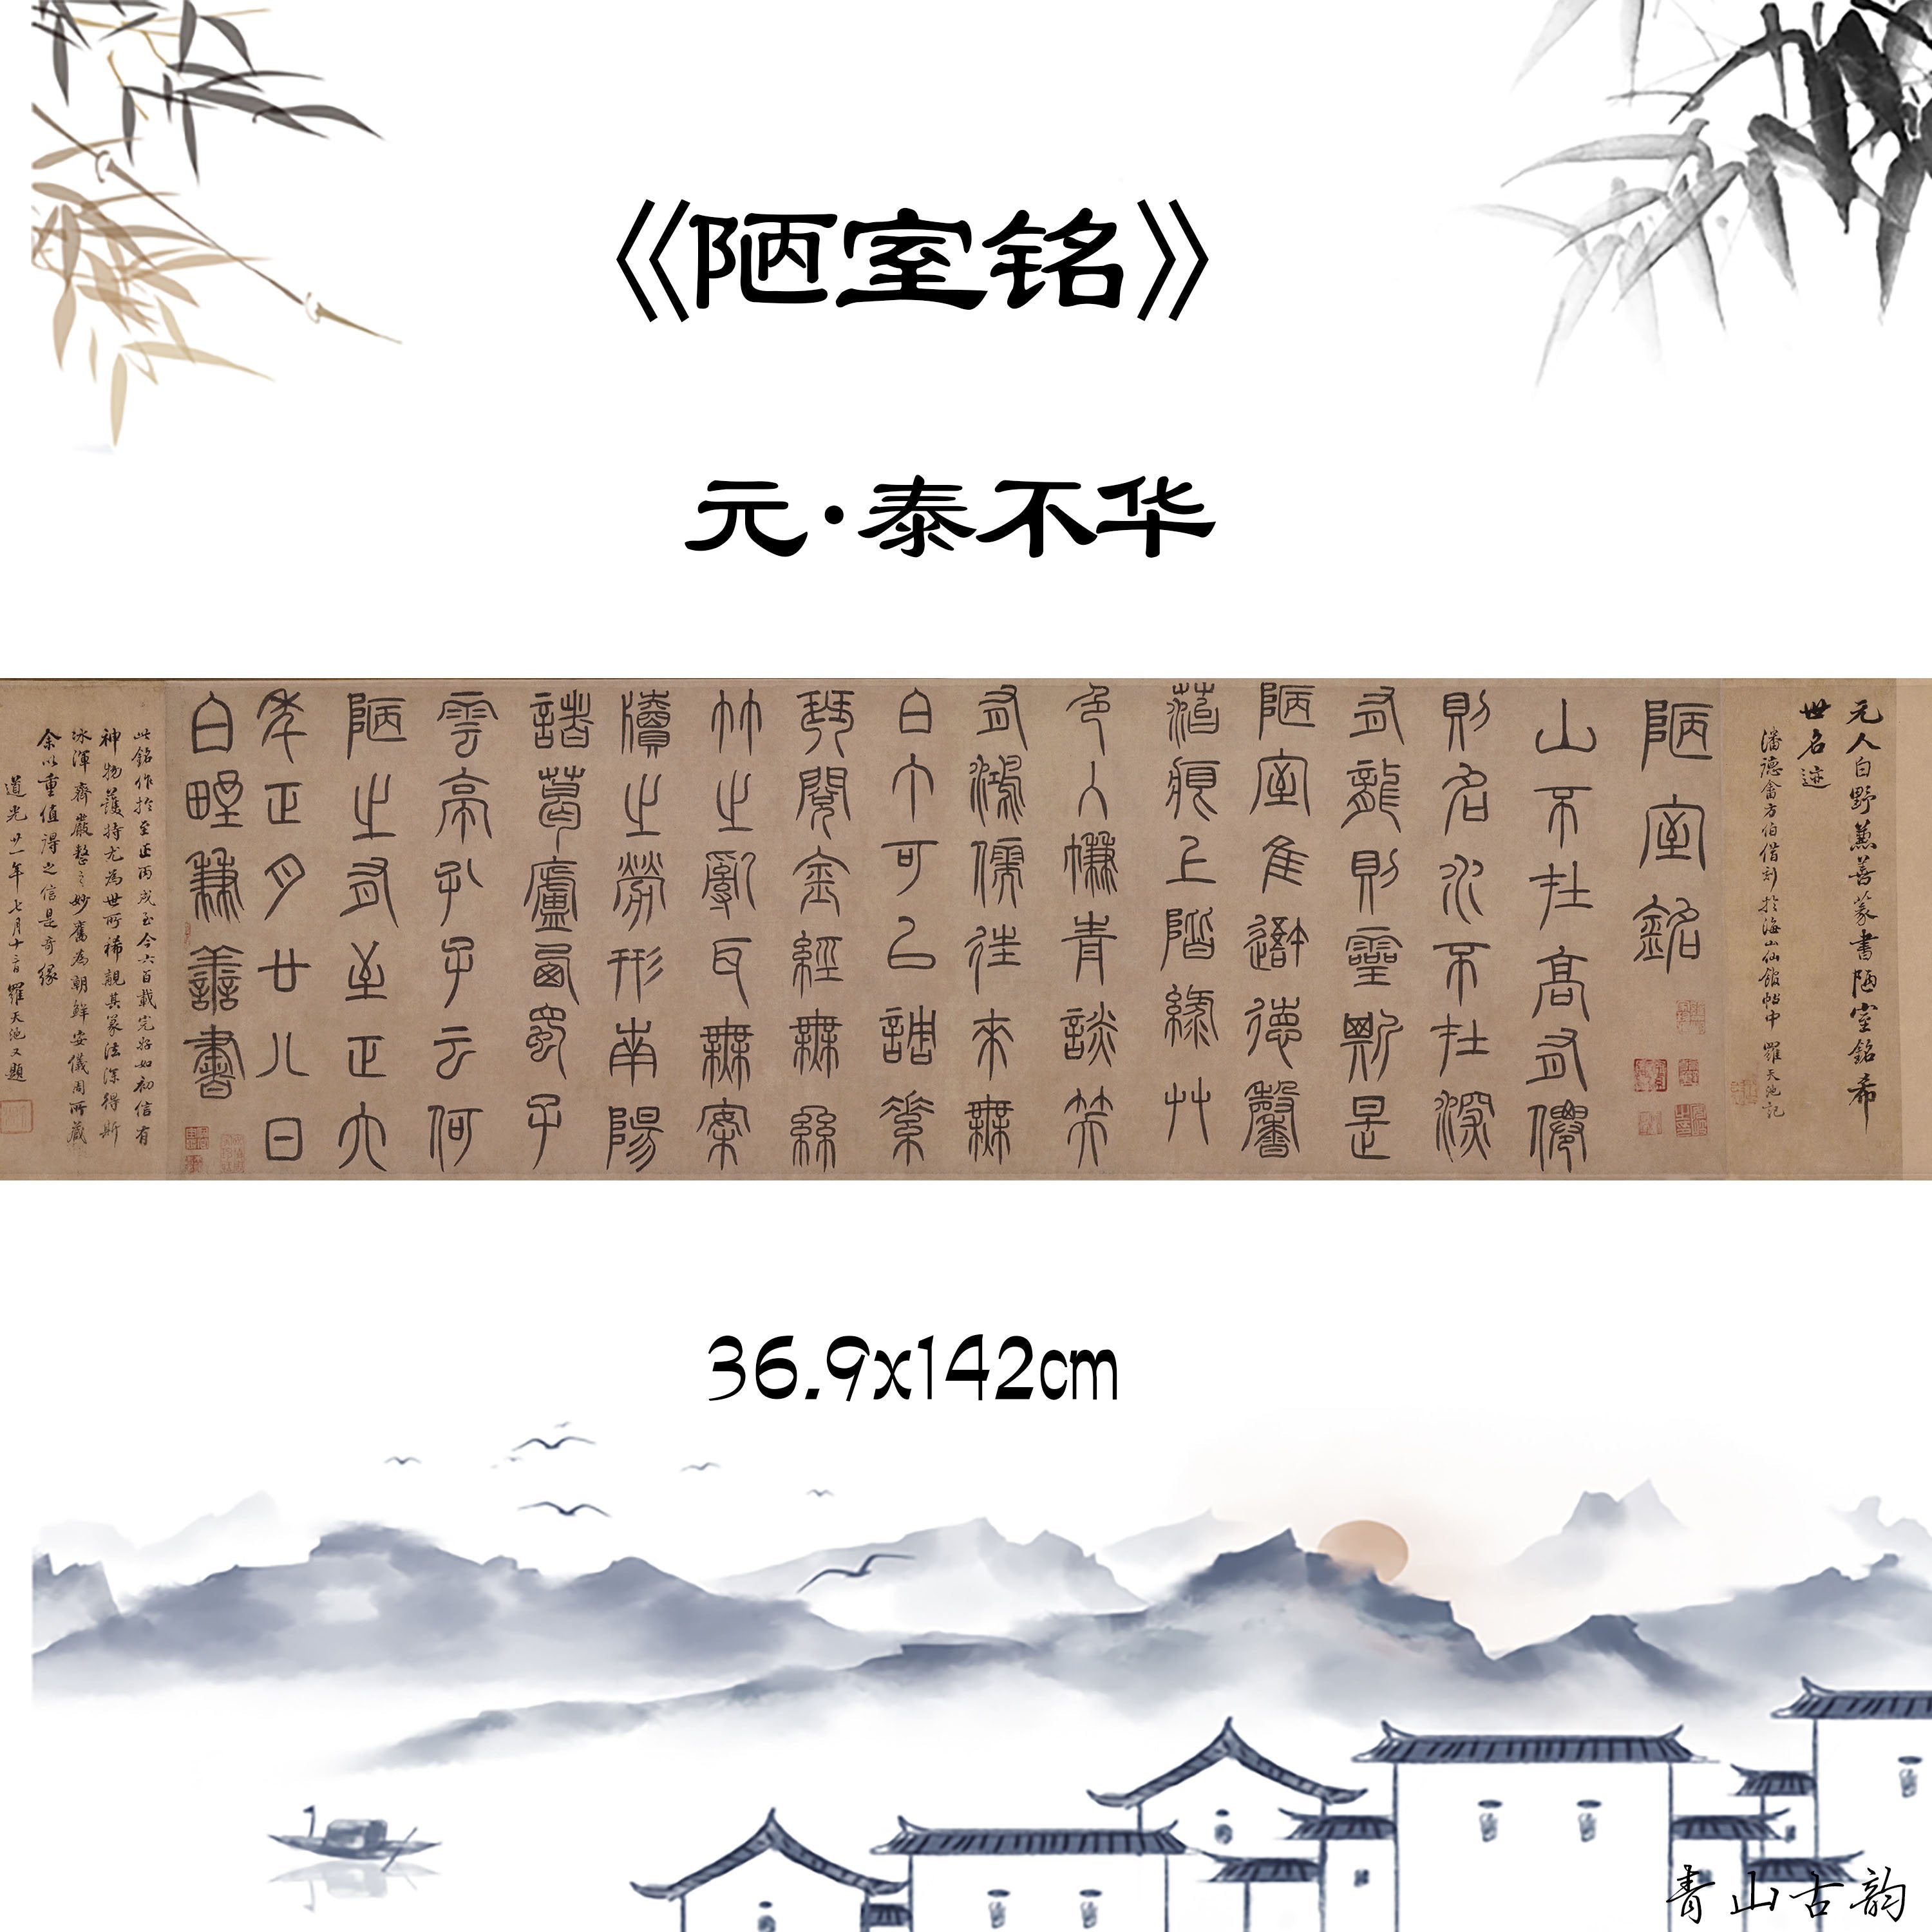 Chinese Antique Art Painting 元 泰不华 篆书陋室铭 Yuan Tai Bu Hua Zhuan Shu Lou Shi Ming China Ancient Wall Picture Ideas 1618-Chinese Style Finds™